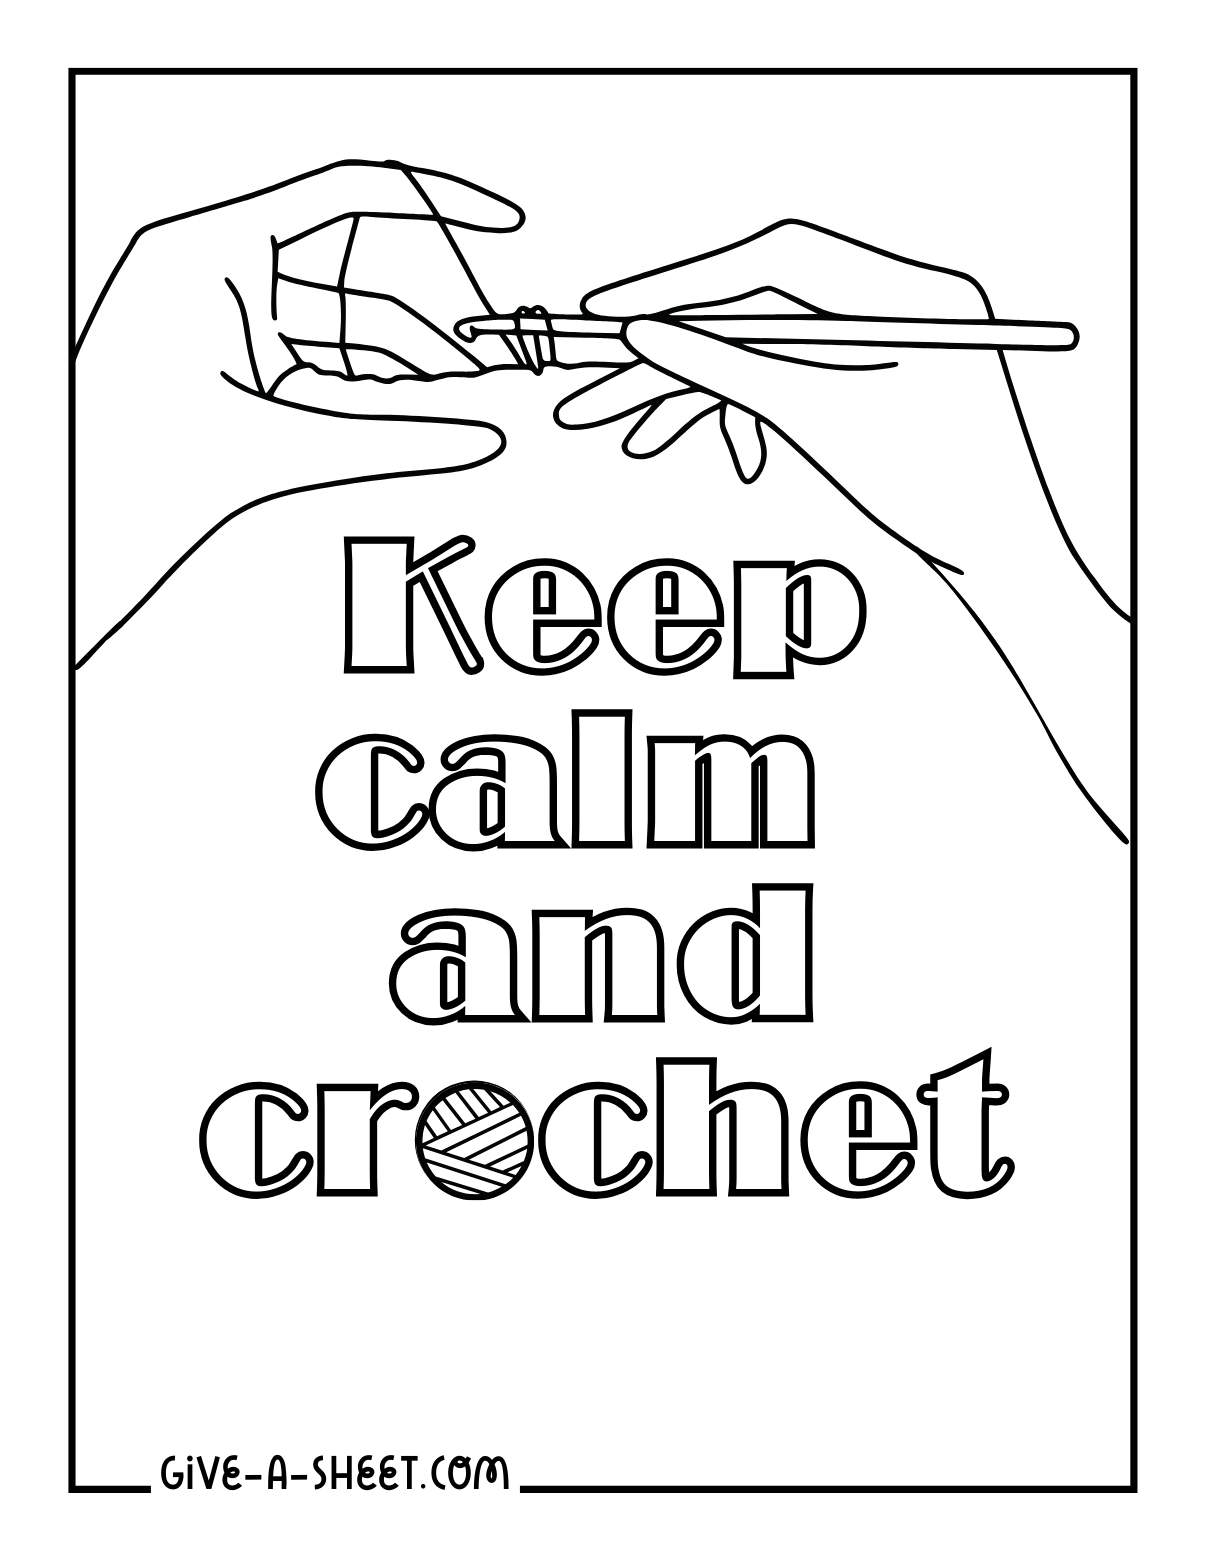 Crochet single crochet stitch coloring page.